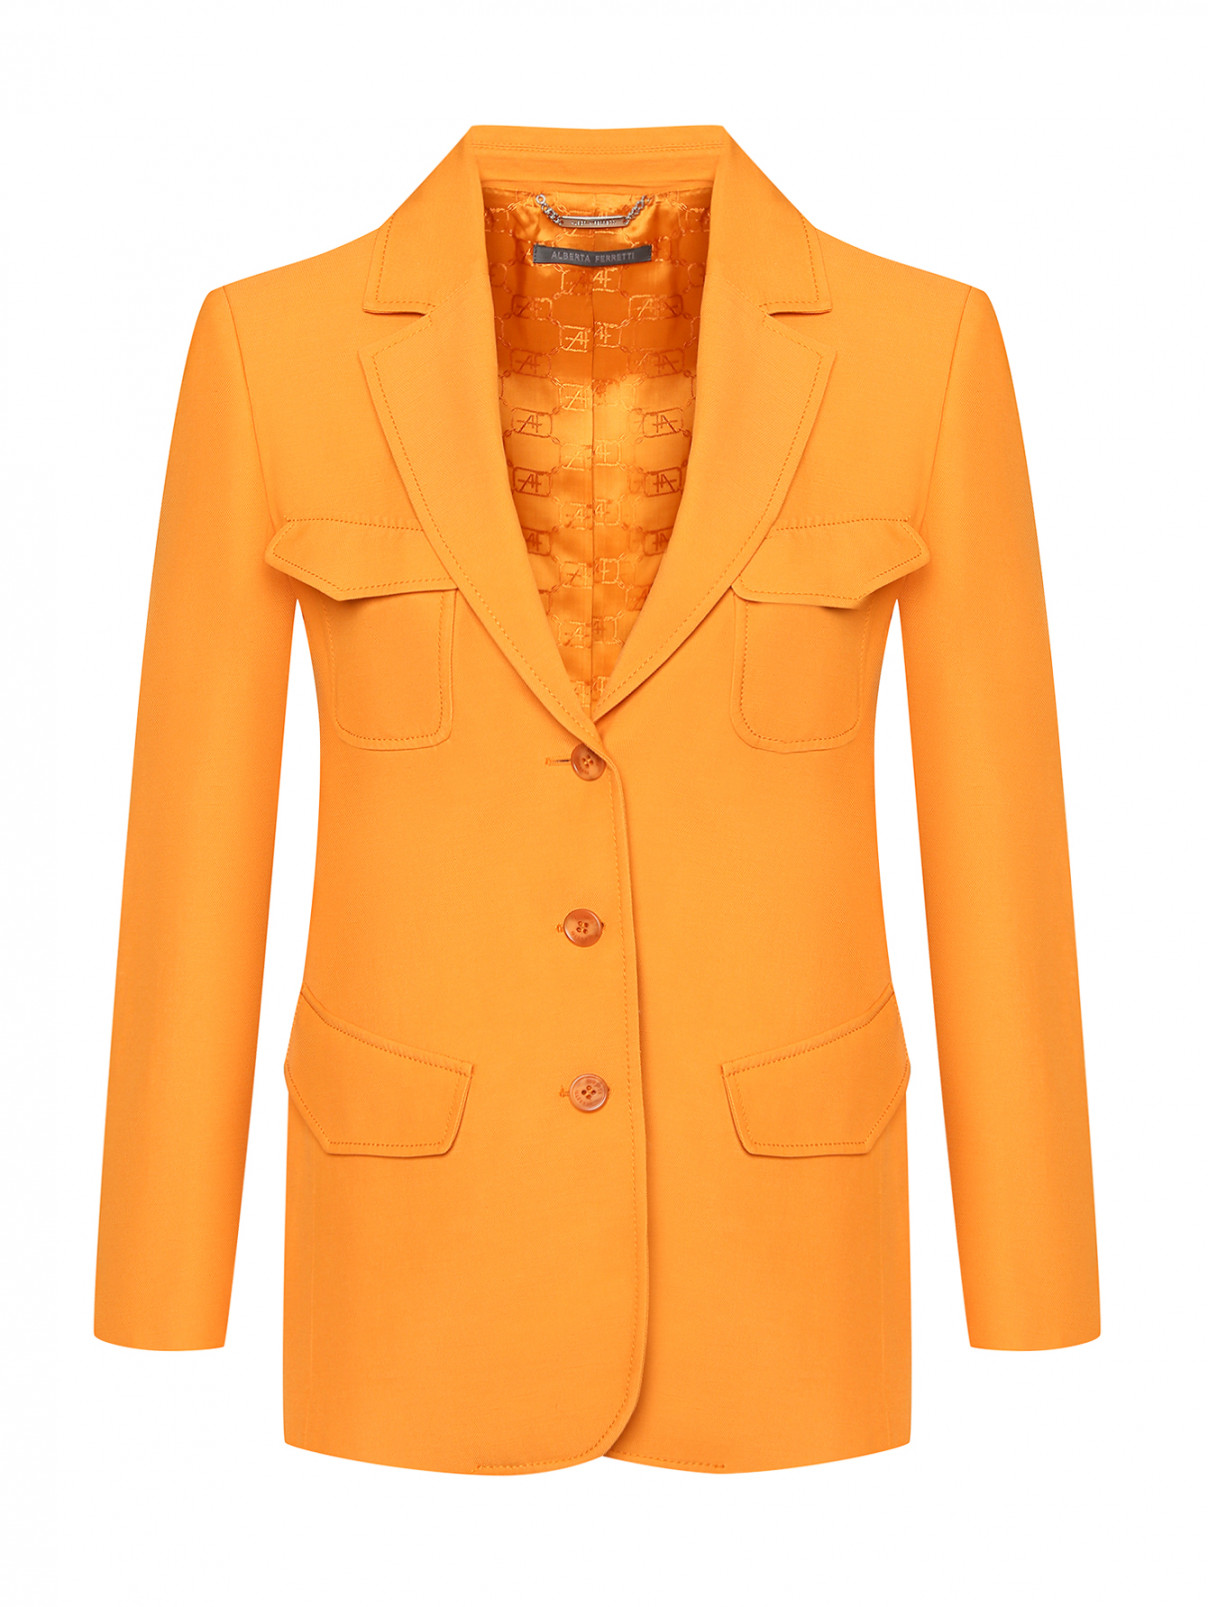 Однотонный жакет с карманами Alberta Ferretti  –  Общий вид  – Цвет:  Оранжевый